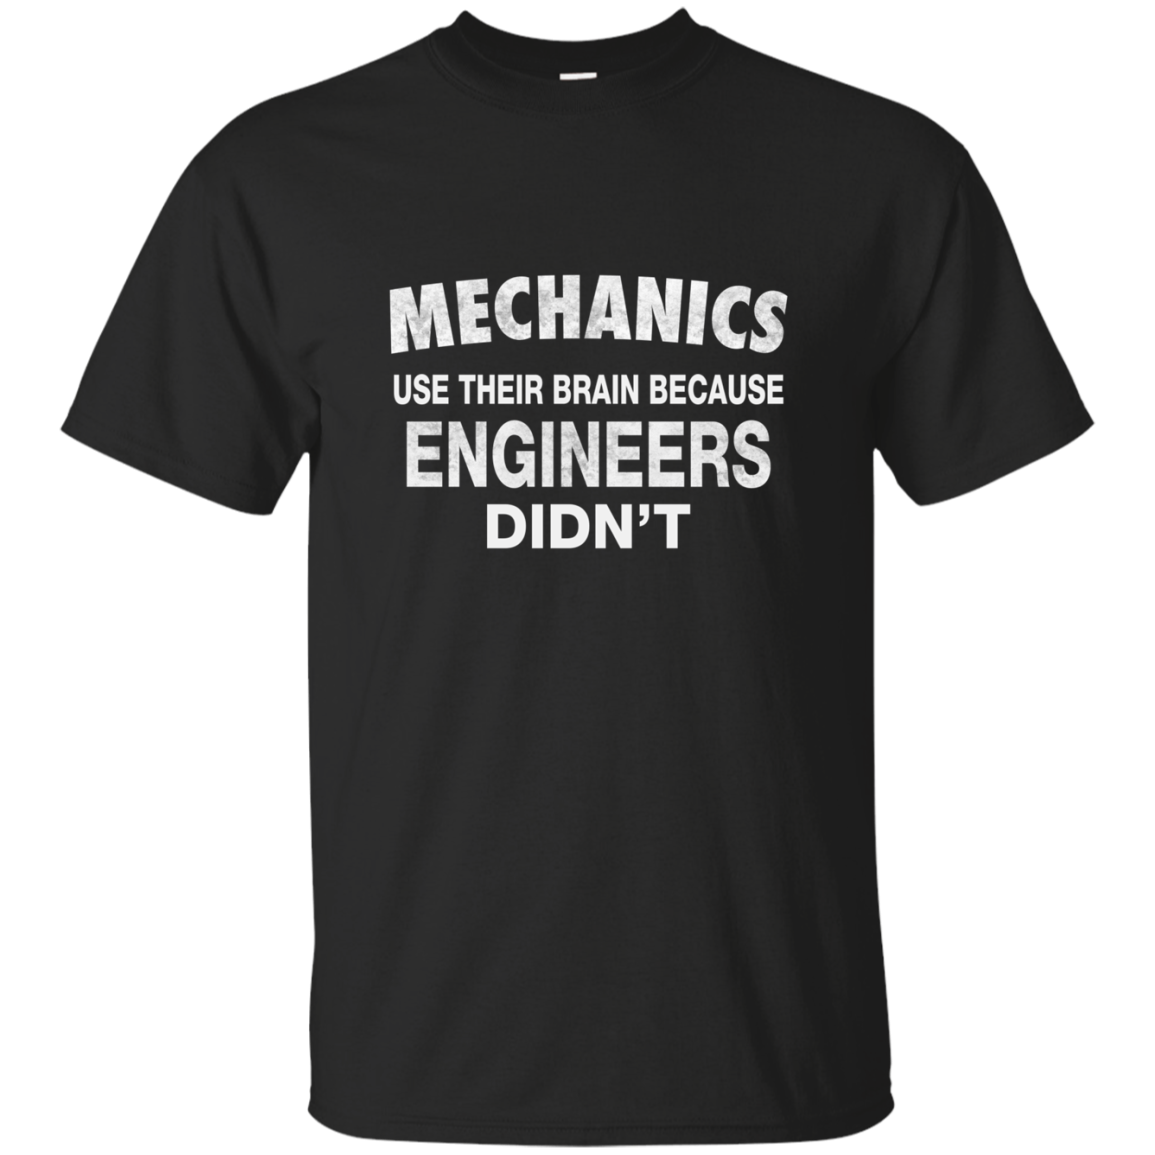 Mechanics use their brain because engineers didn't shirt, hoodie